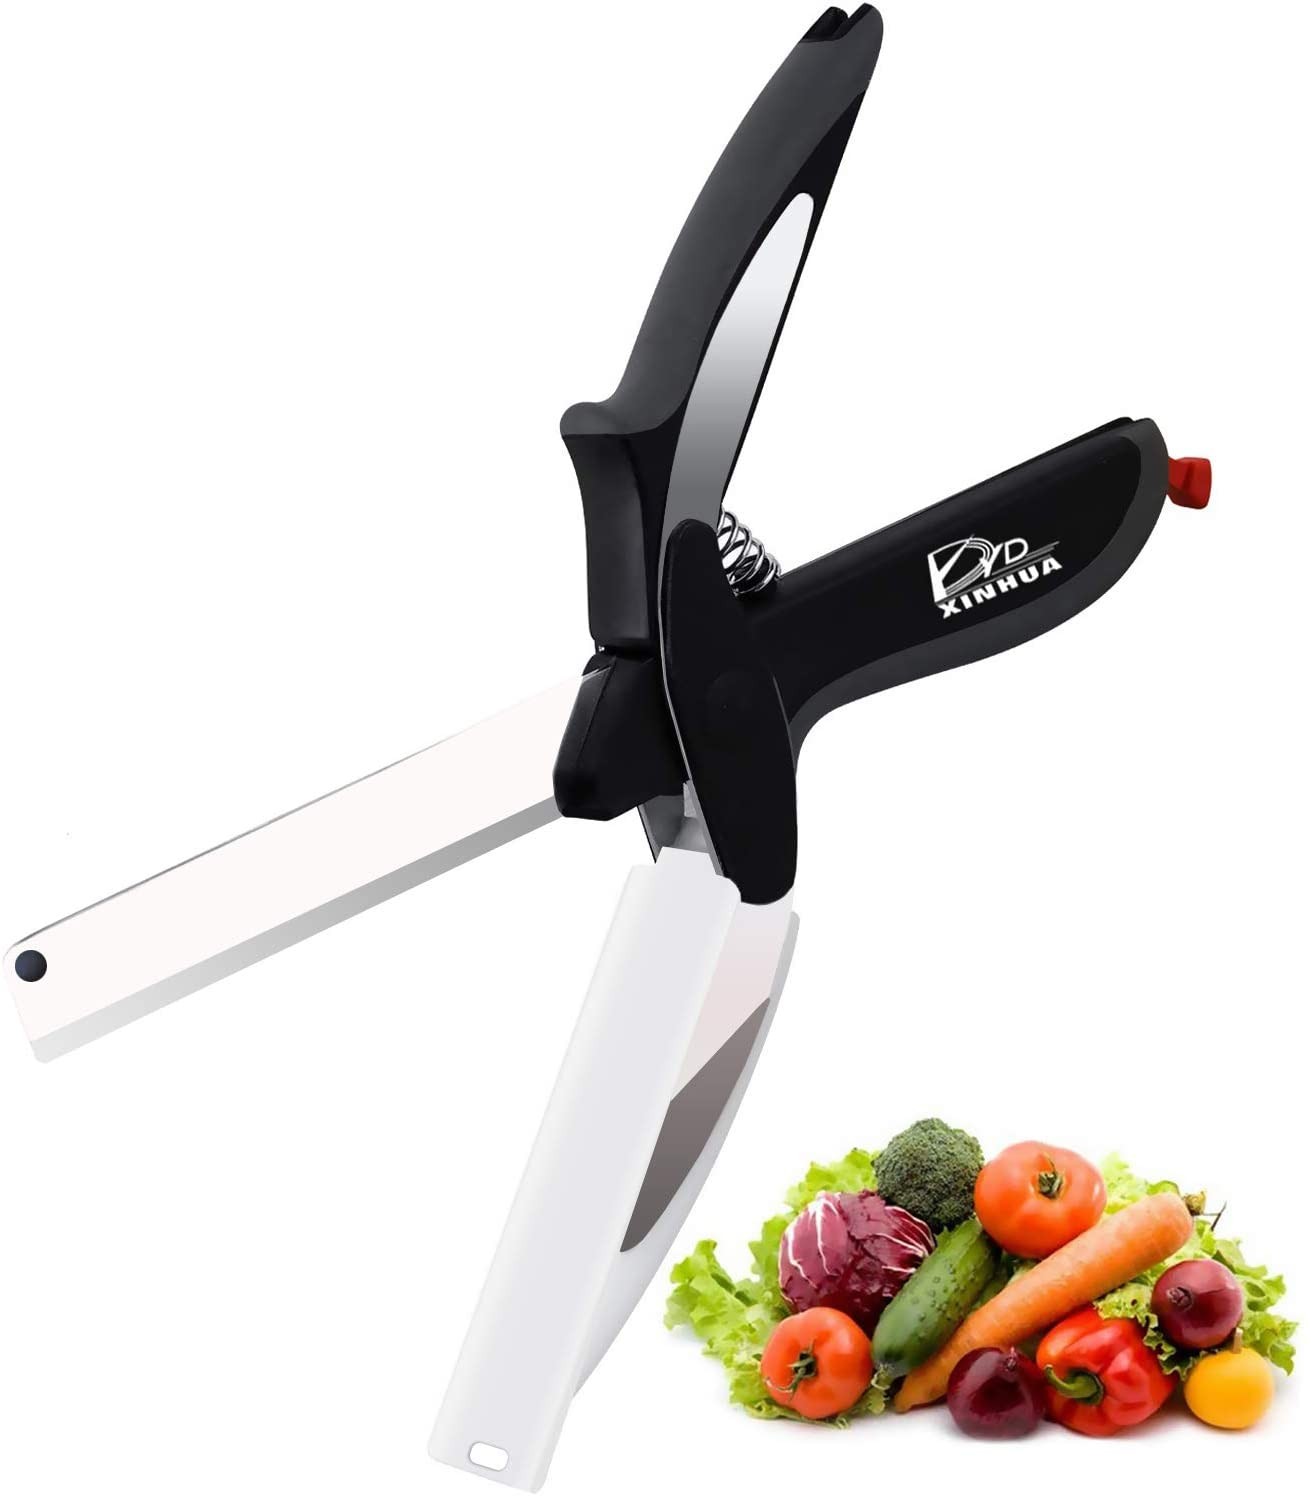 Vegetable Scissor